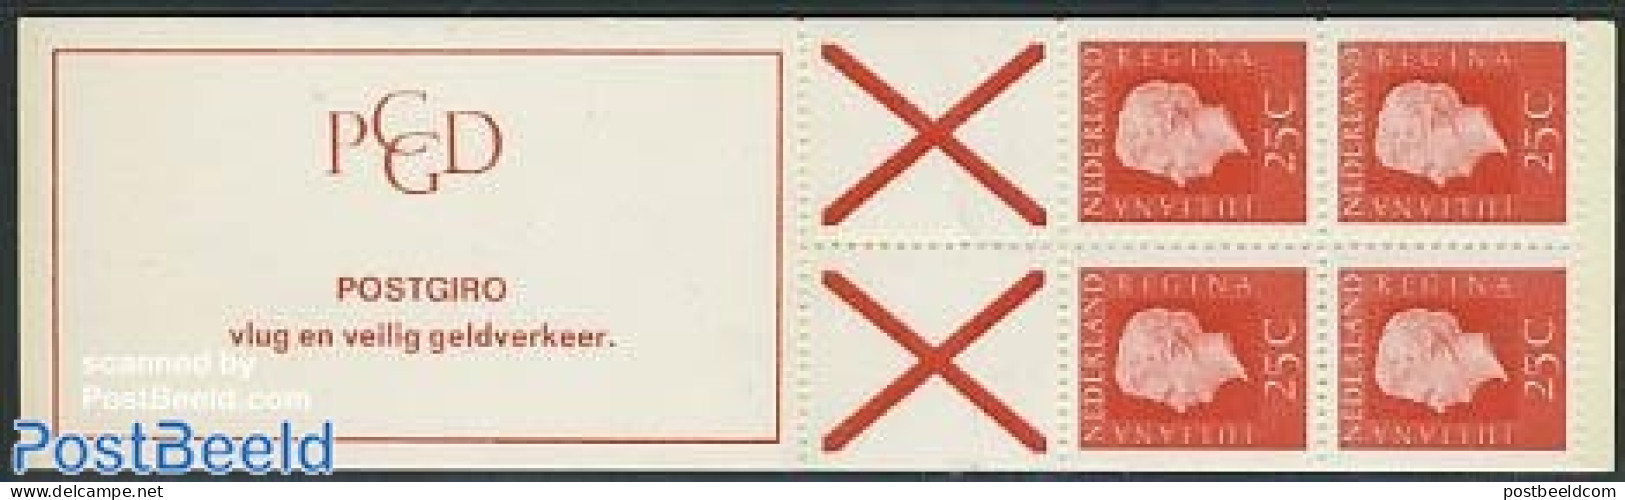 Netherlands 1969 4x25c Booklet, Phosphor, Count Block, POSTGIRO Vlu, Mint NH, Stamp Booklets - Unused Stamps